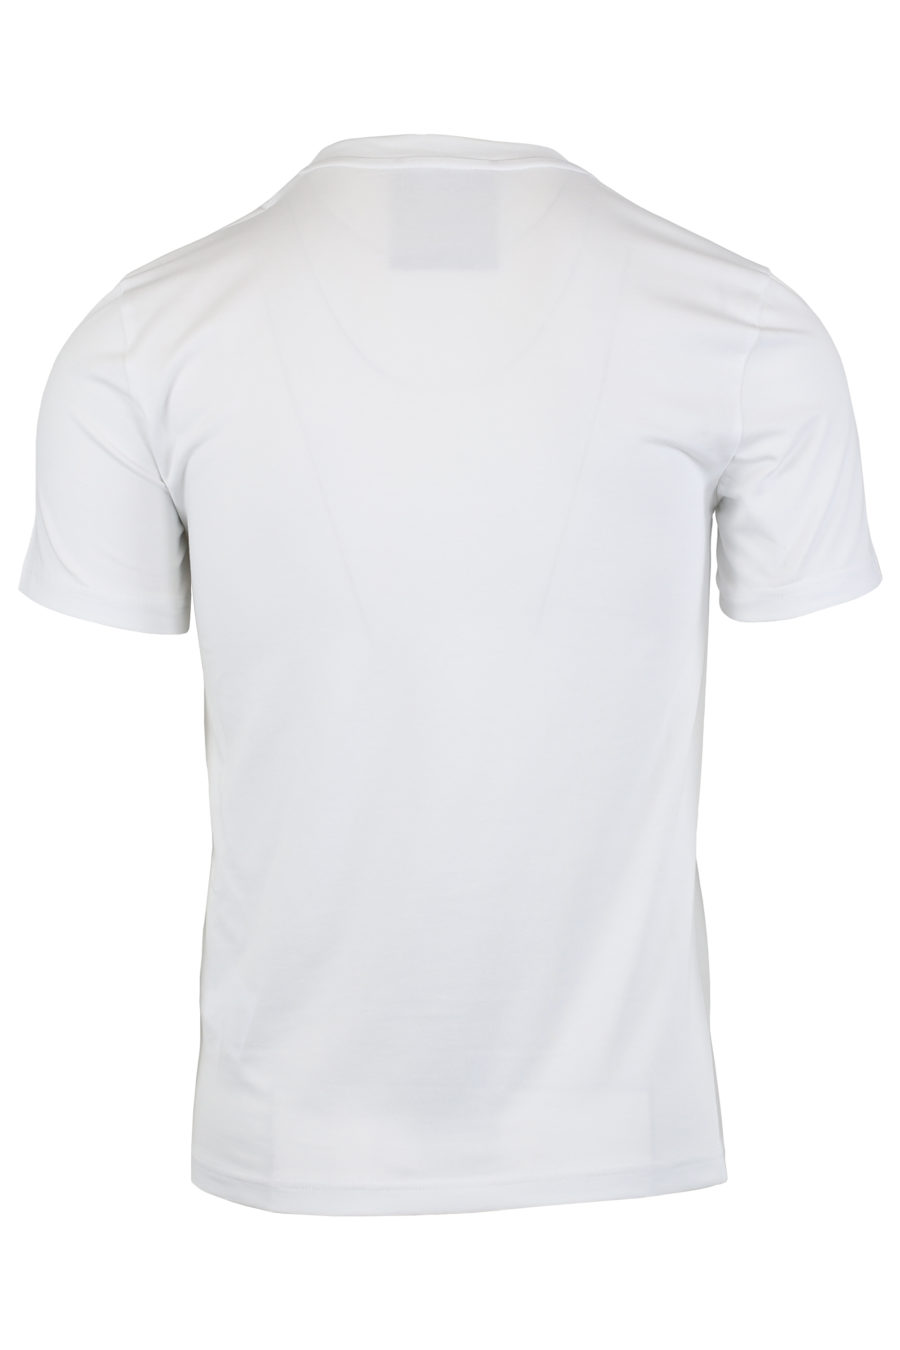 Camiseta blanca teddy summer - IMG 0870